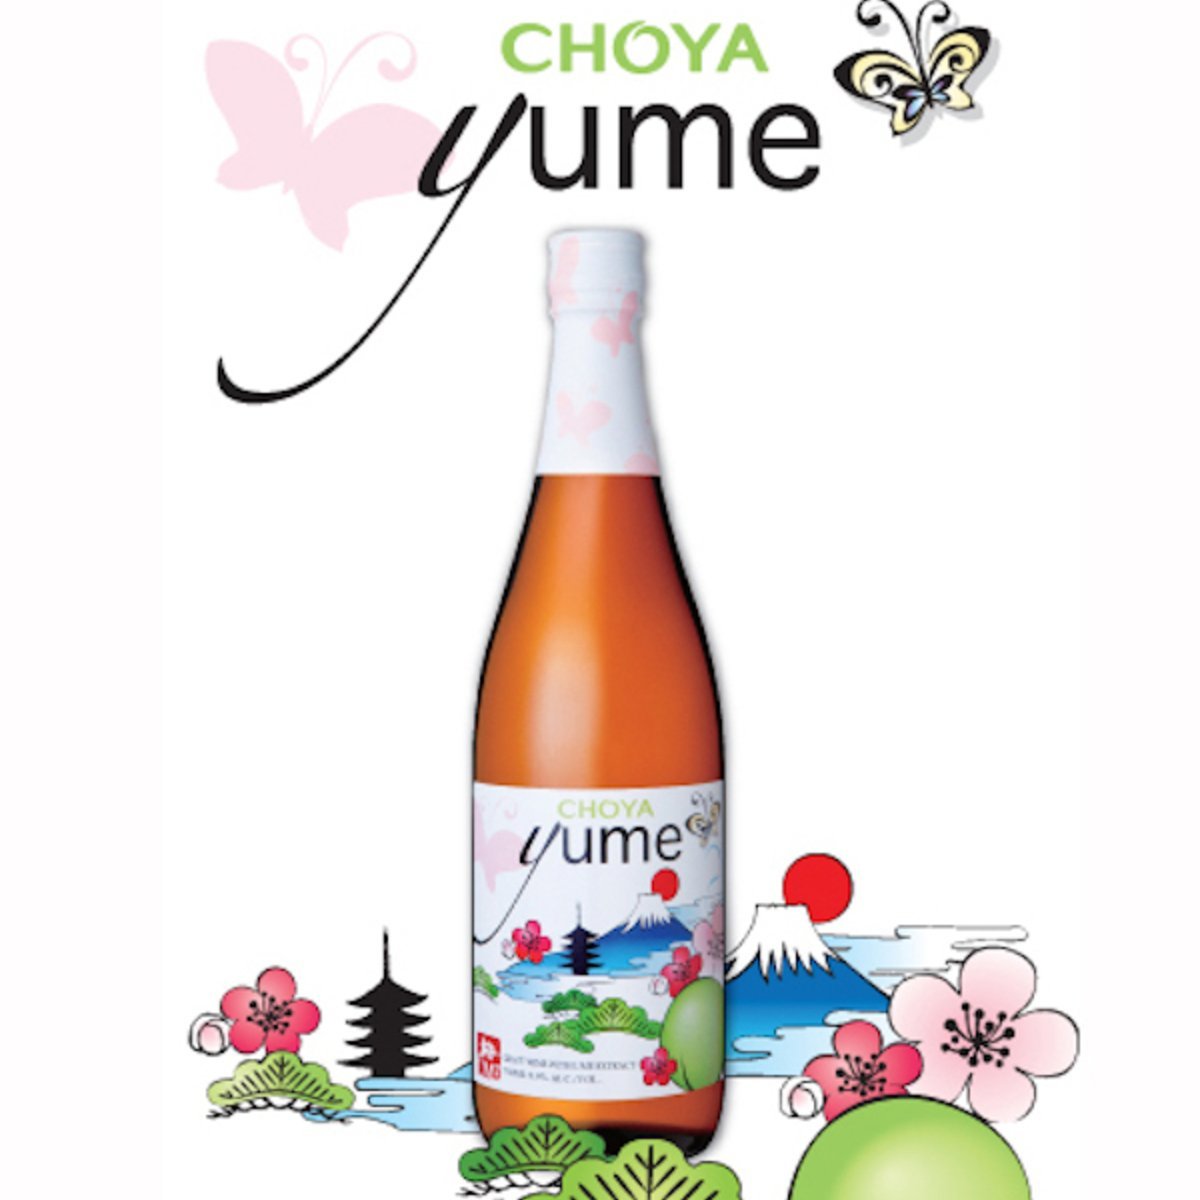 Choya Yume Wine 750ml - Calia Australia Pty Ltd